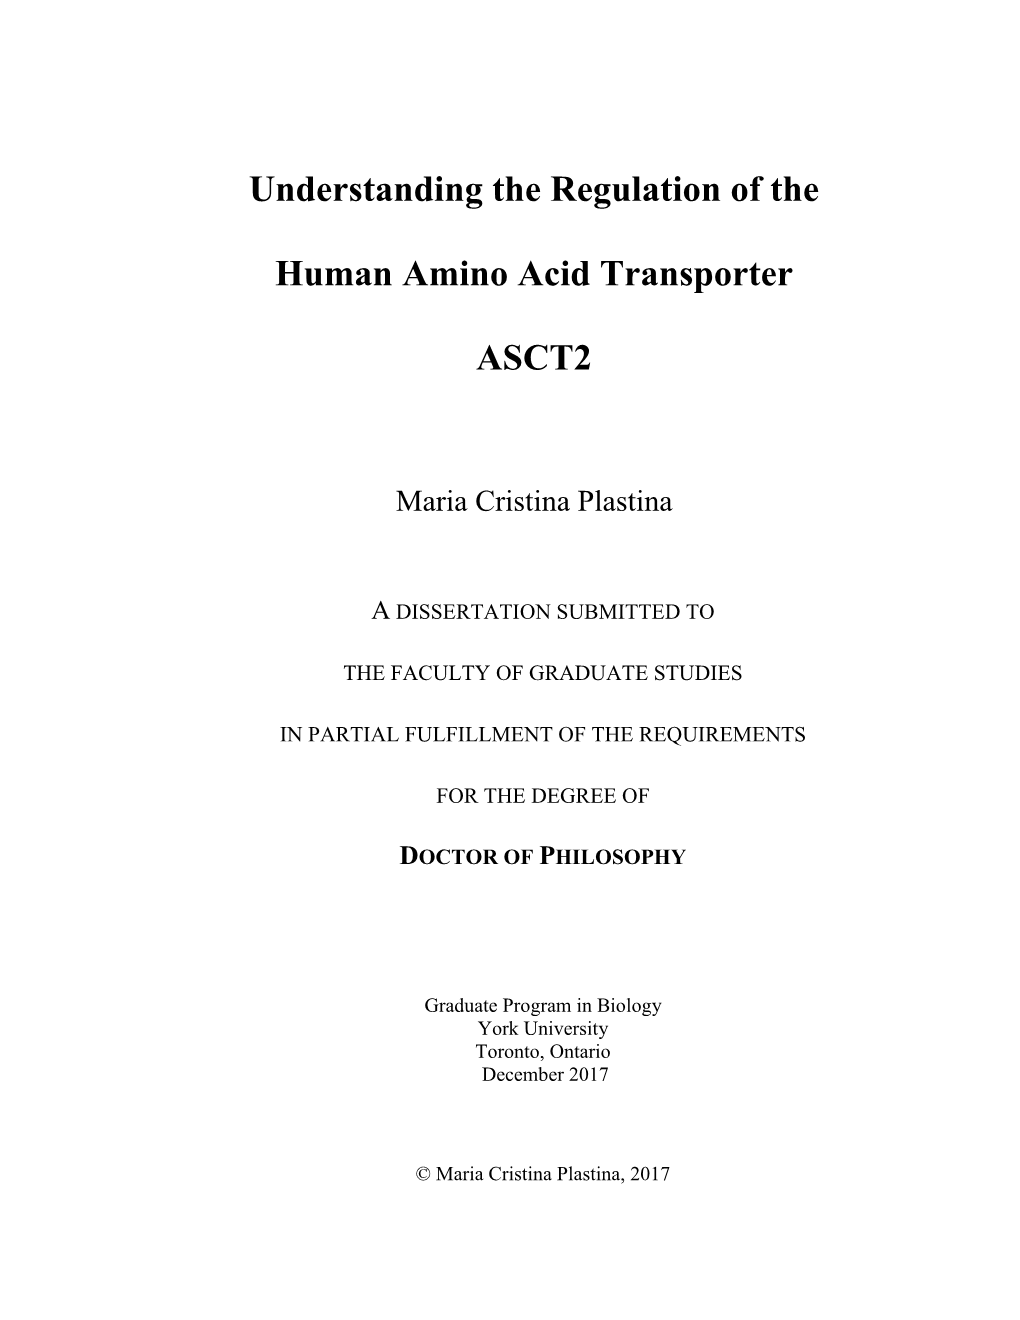 Understanding the Regulation of the Human Amino Acid Transporter